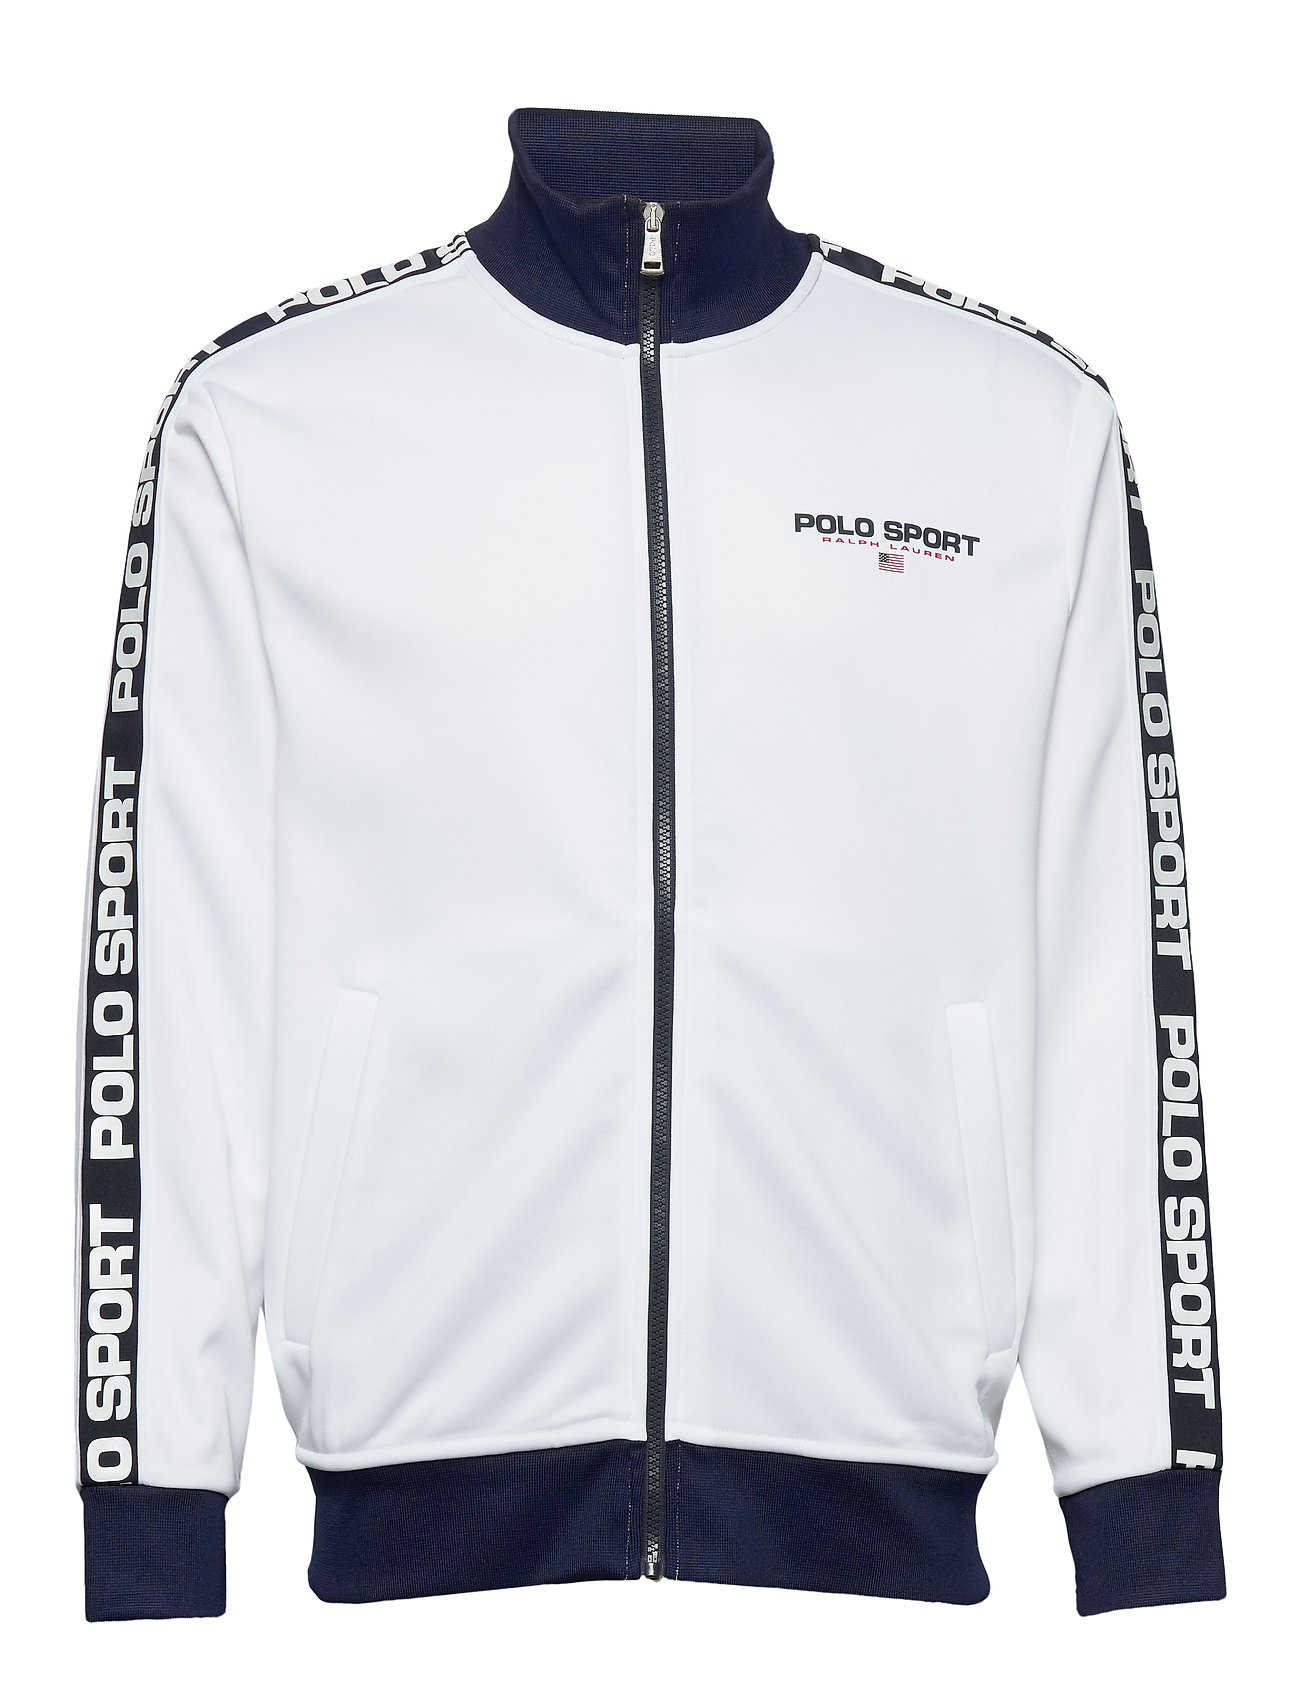 polo track jacket